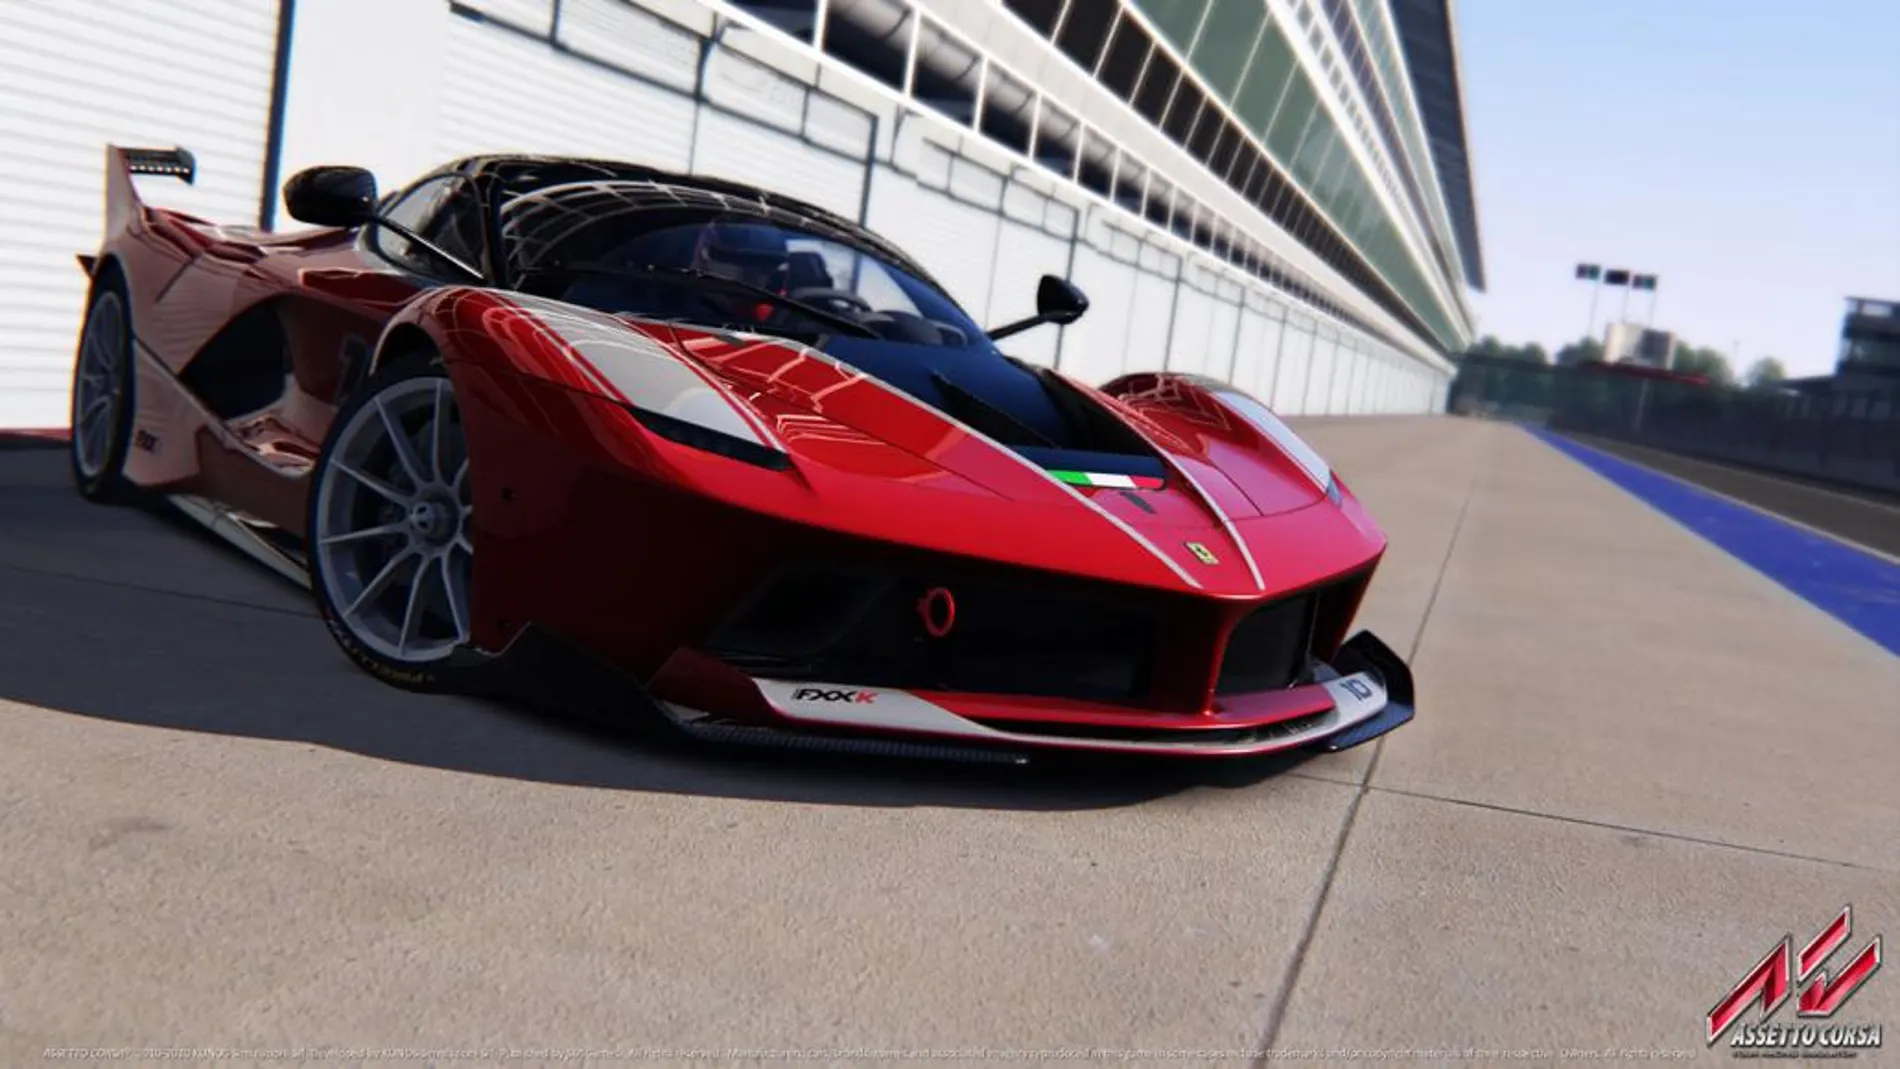 «Assetto Corsa» llegará a consolas en abril con el Ferrari FFX-K en la carátula